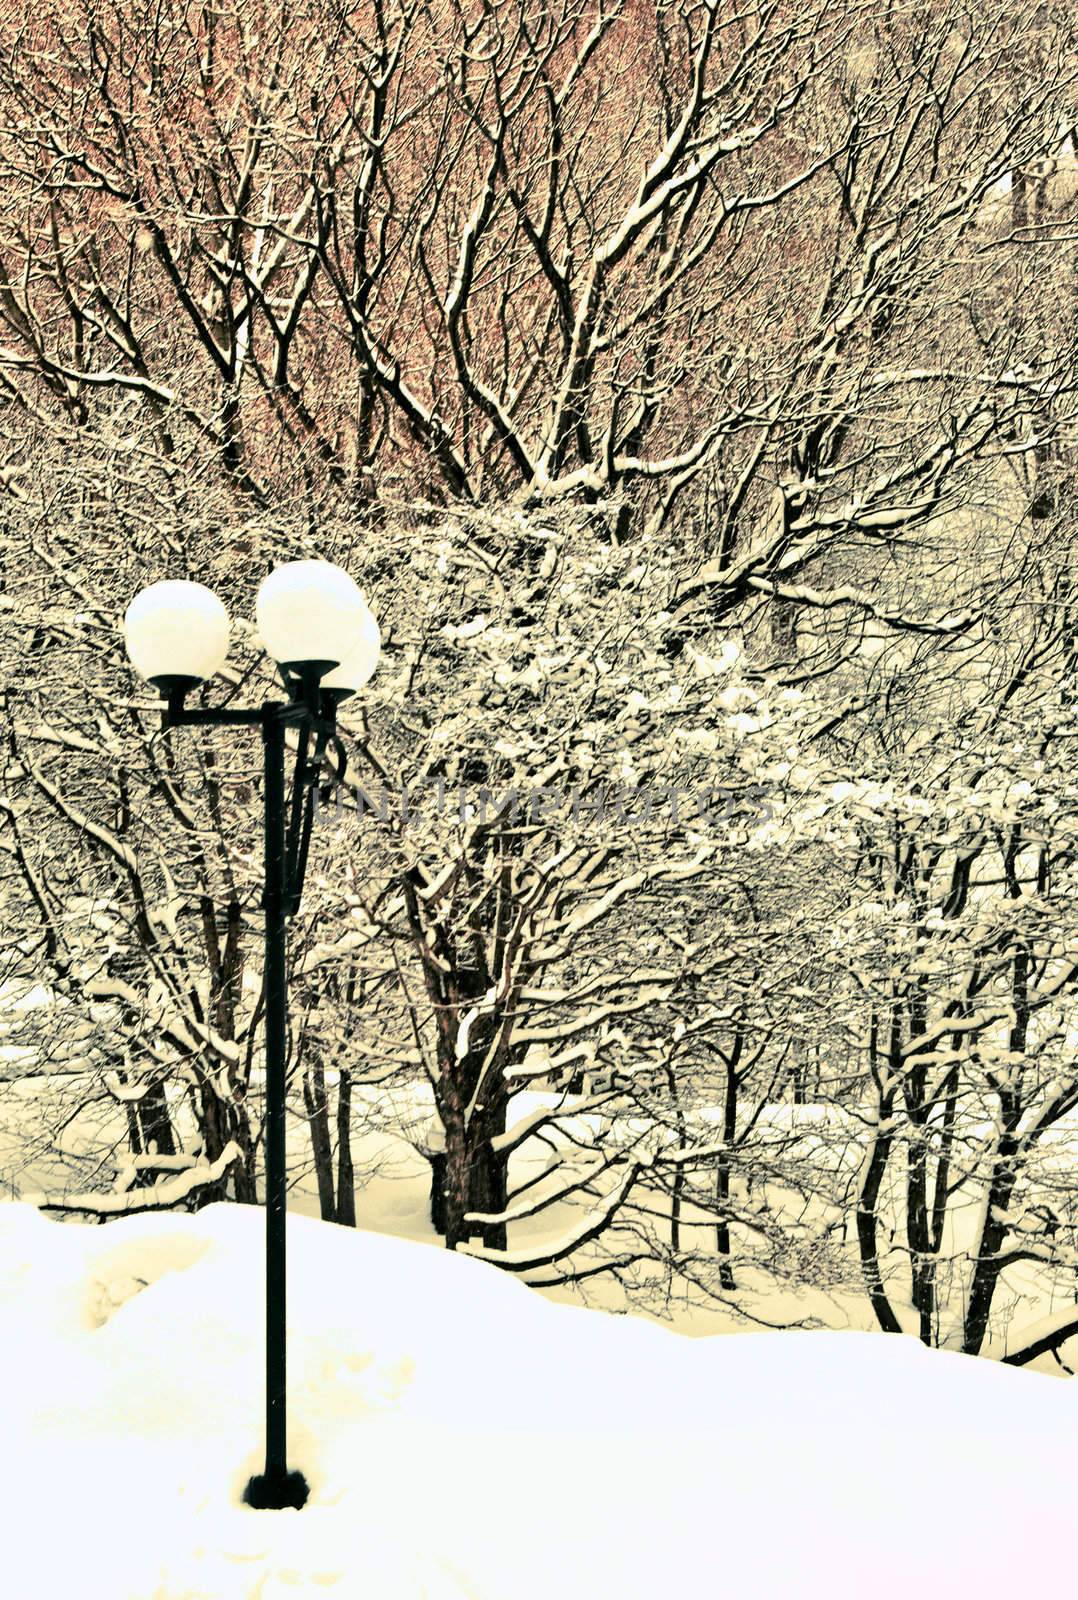 Snowy lantern with snow falling on street